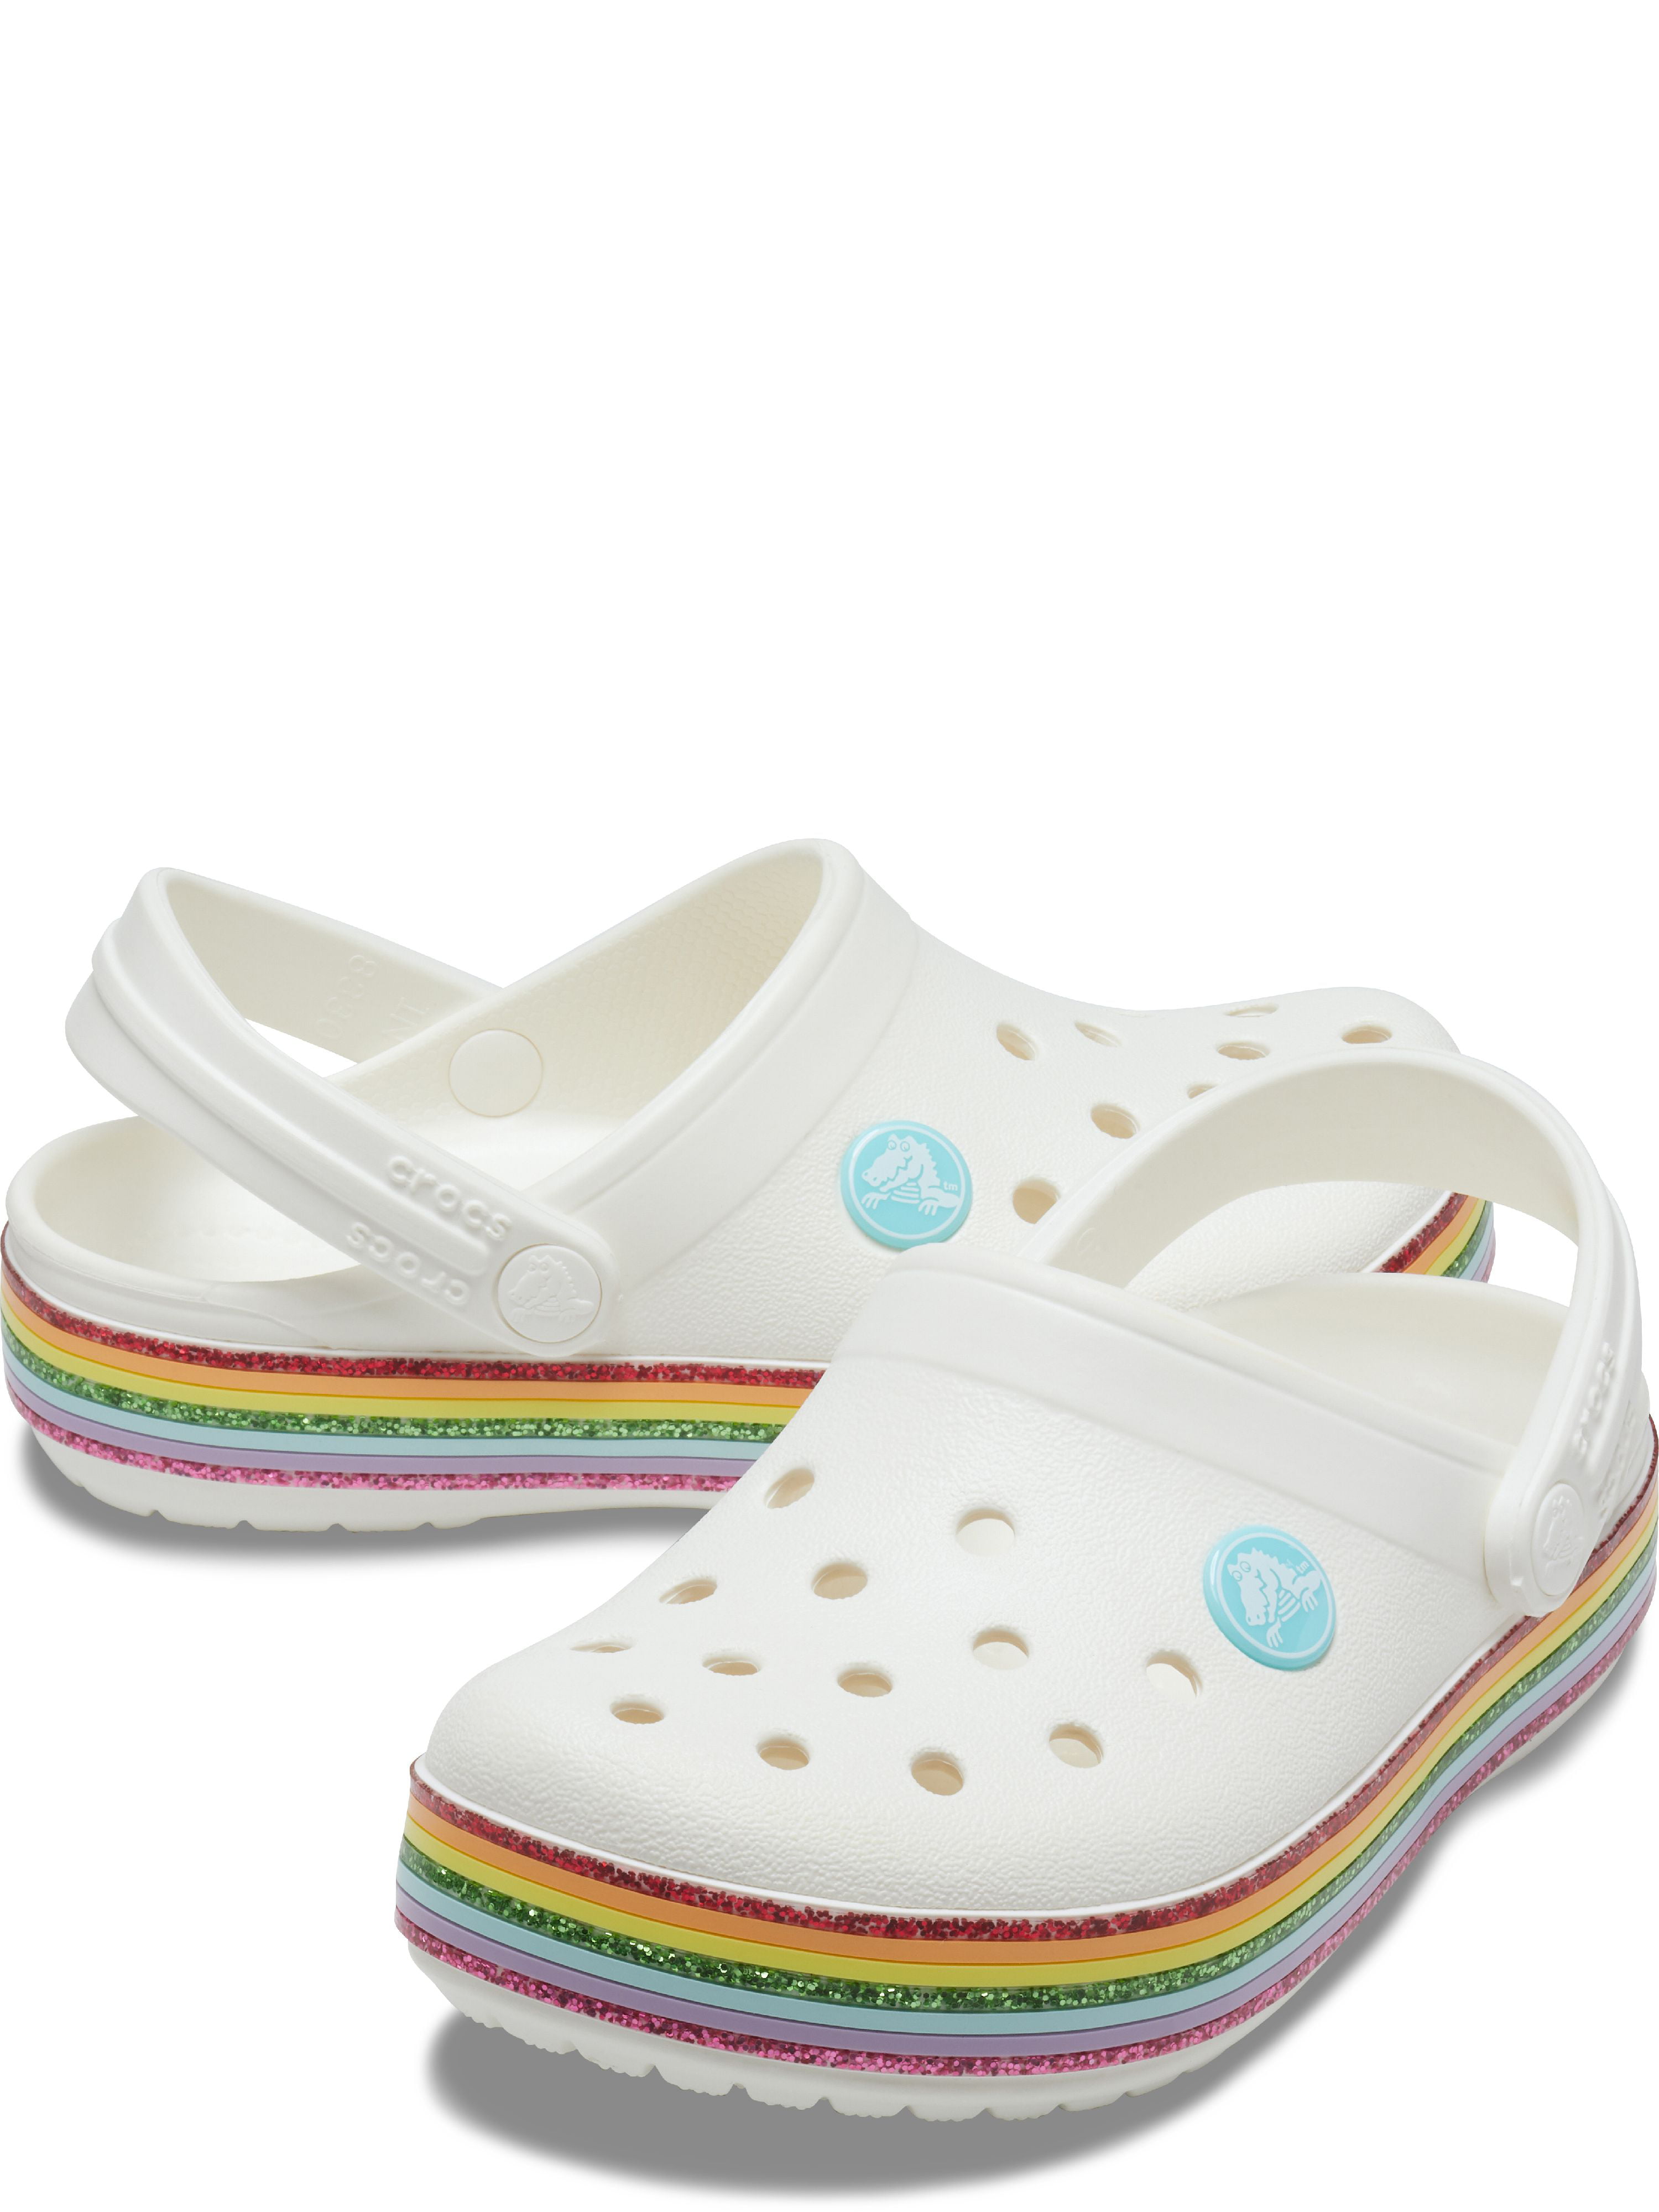 Crocs Crocband Rainbow Glitter Clog Kids Zoccoli Unisex Bambini